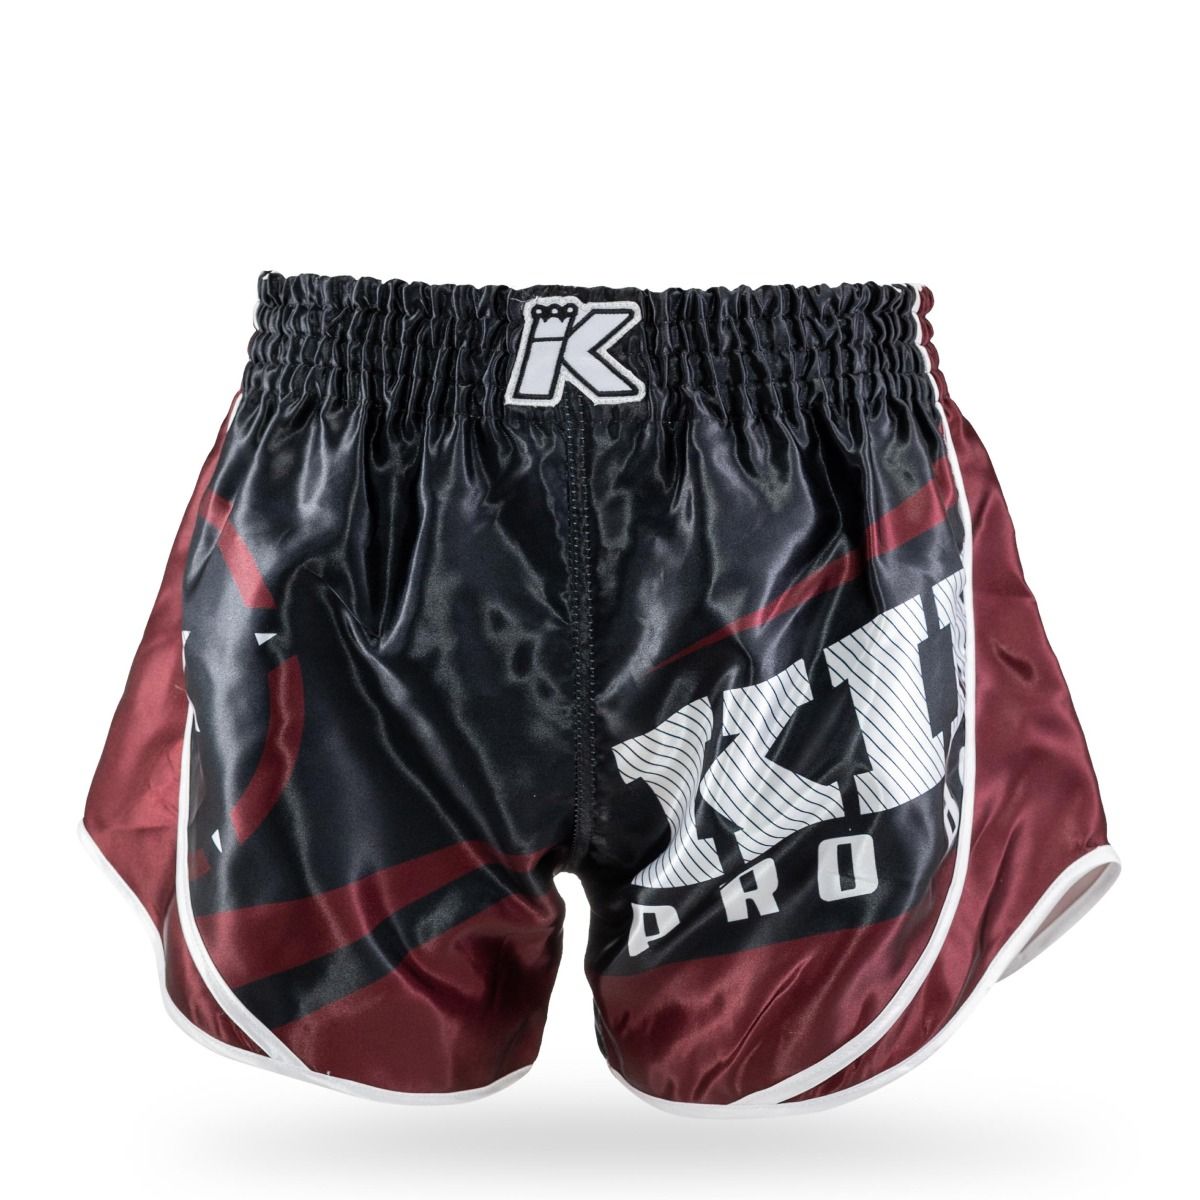 King Pro Boxing - Fightshort - STORMKING 2 - korte broek - zwart - rood